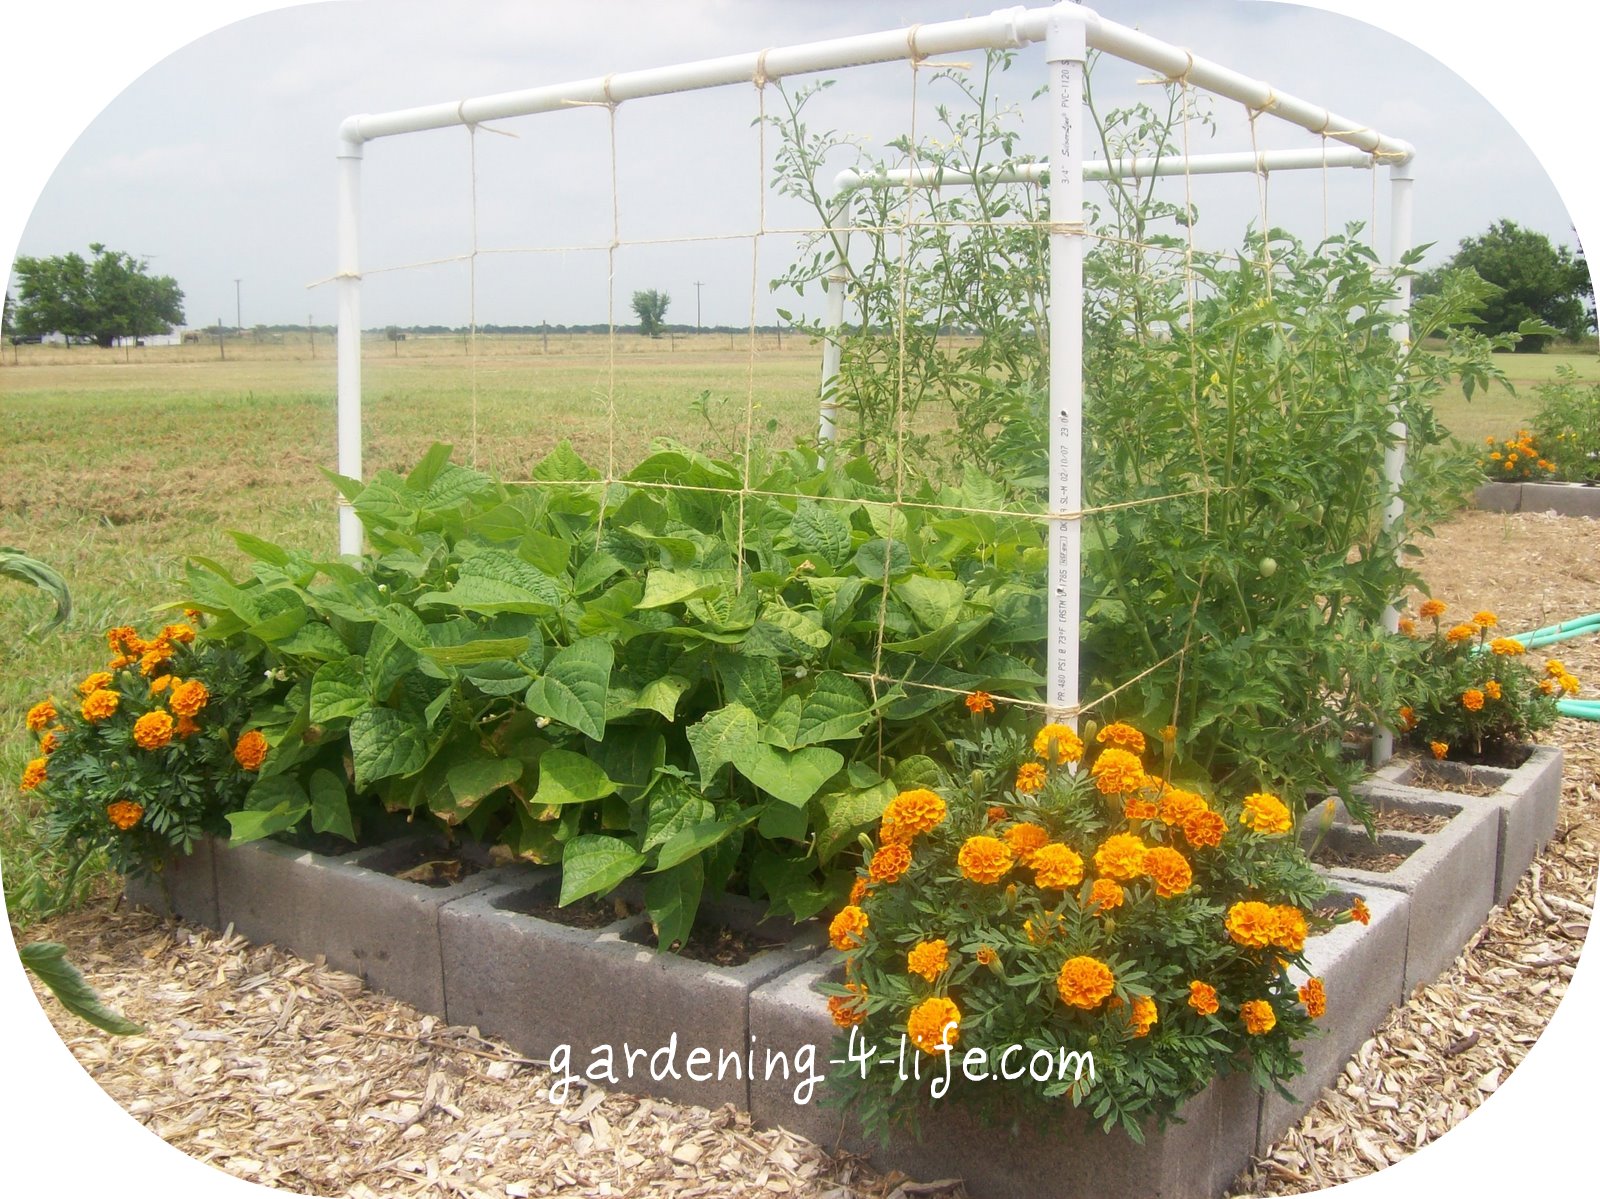 Gardening-4-Life: Cinder Block Garden